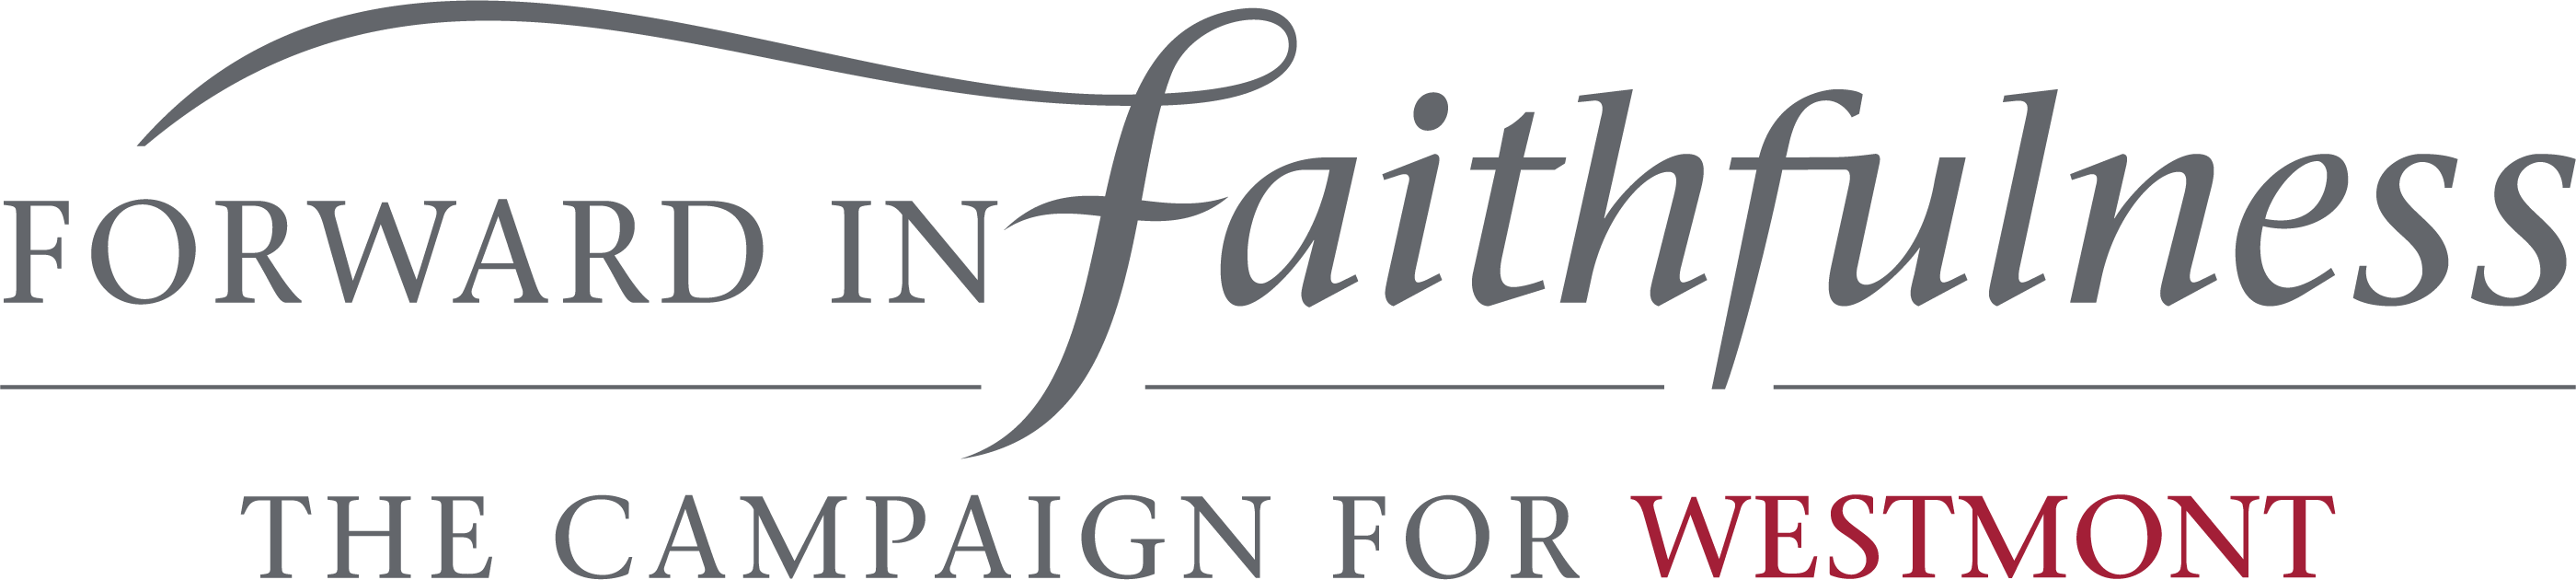 Forward in Faithfulness